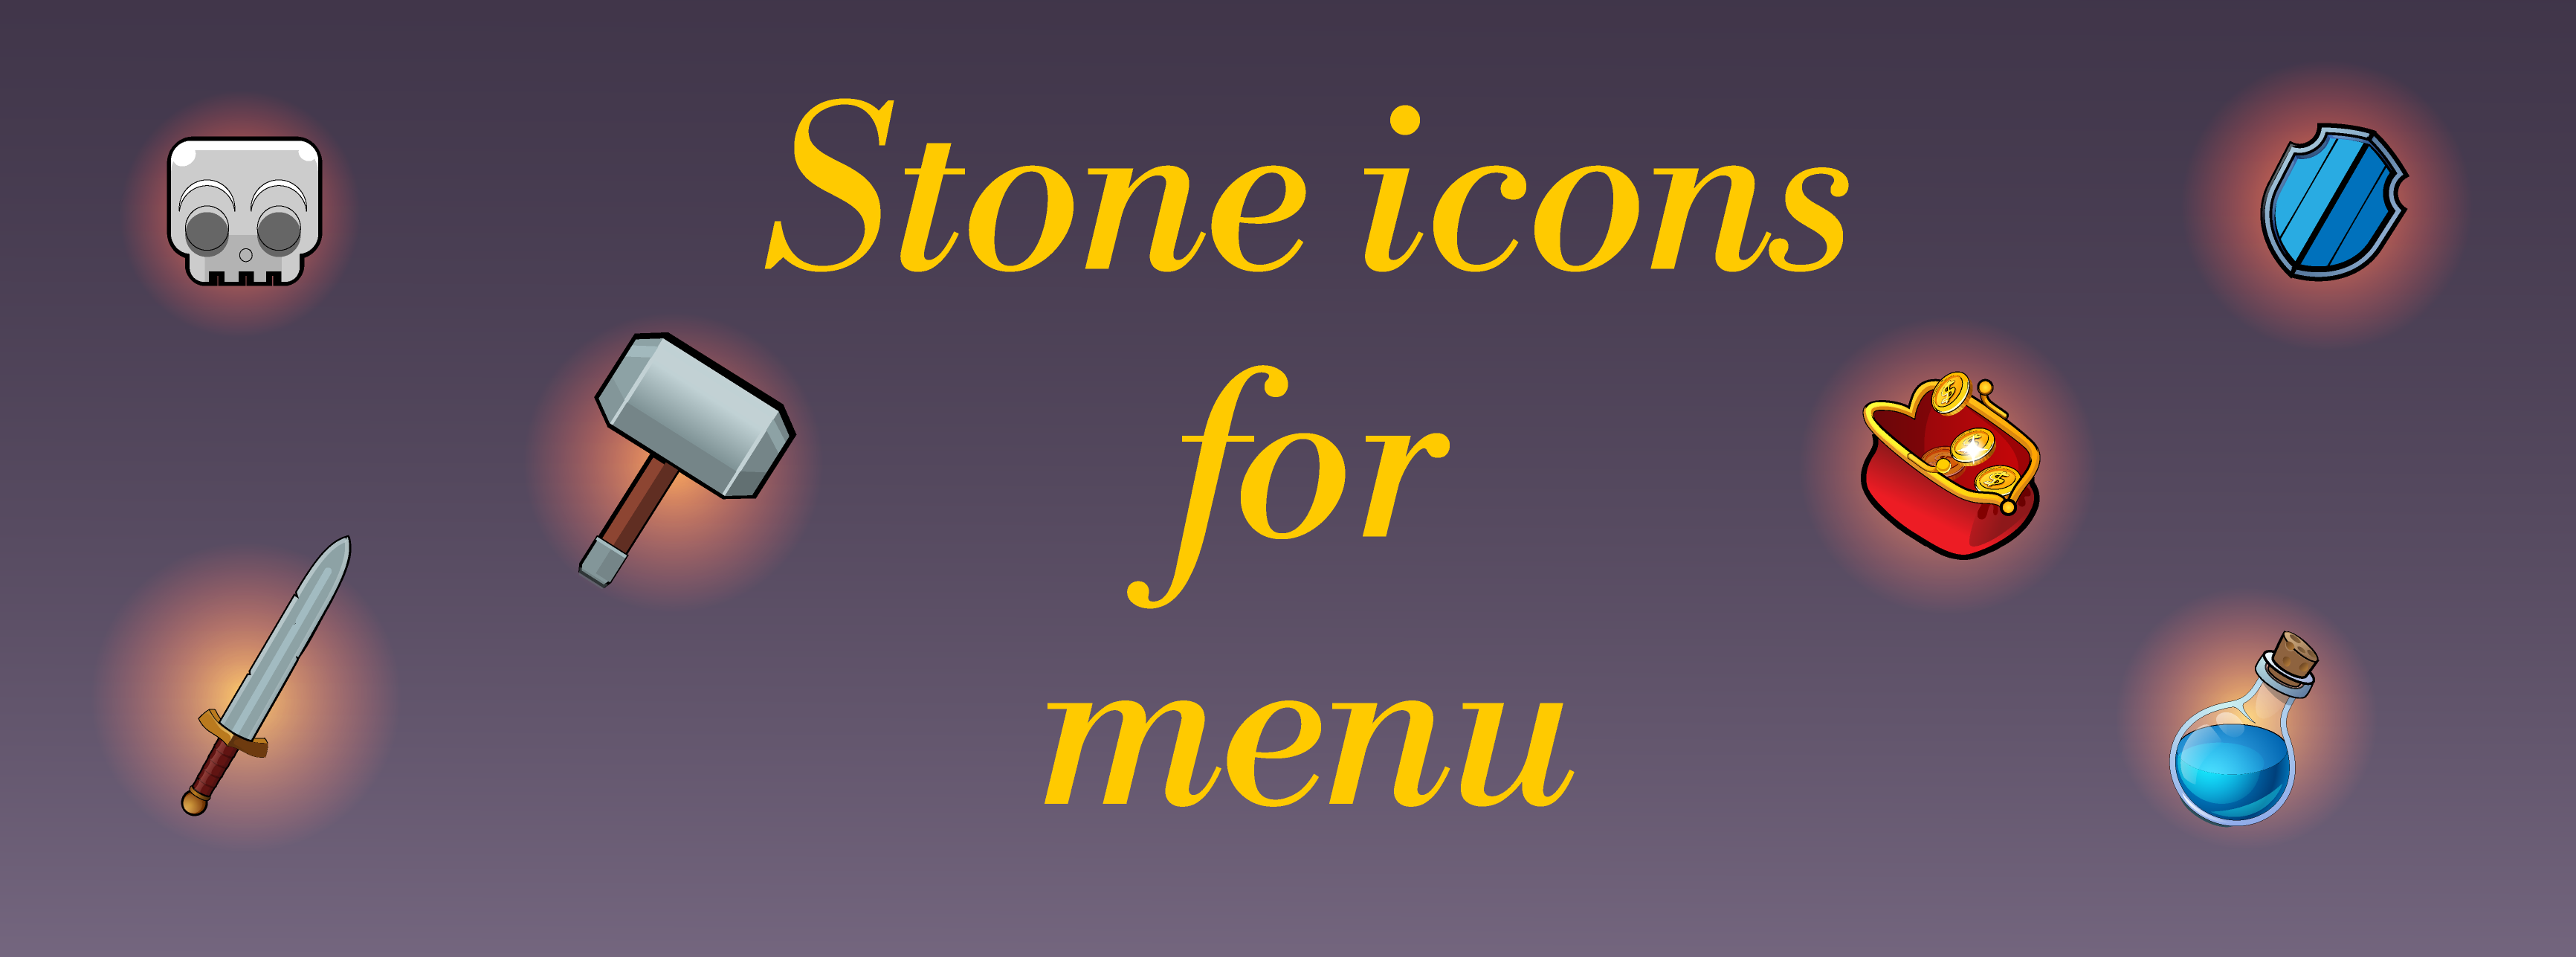 Stone icons for menu